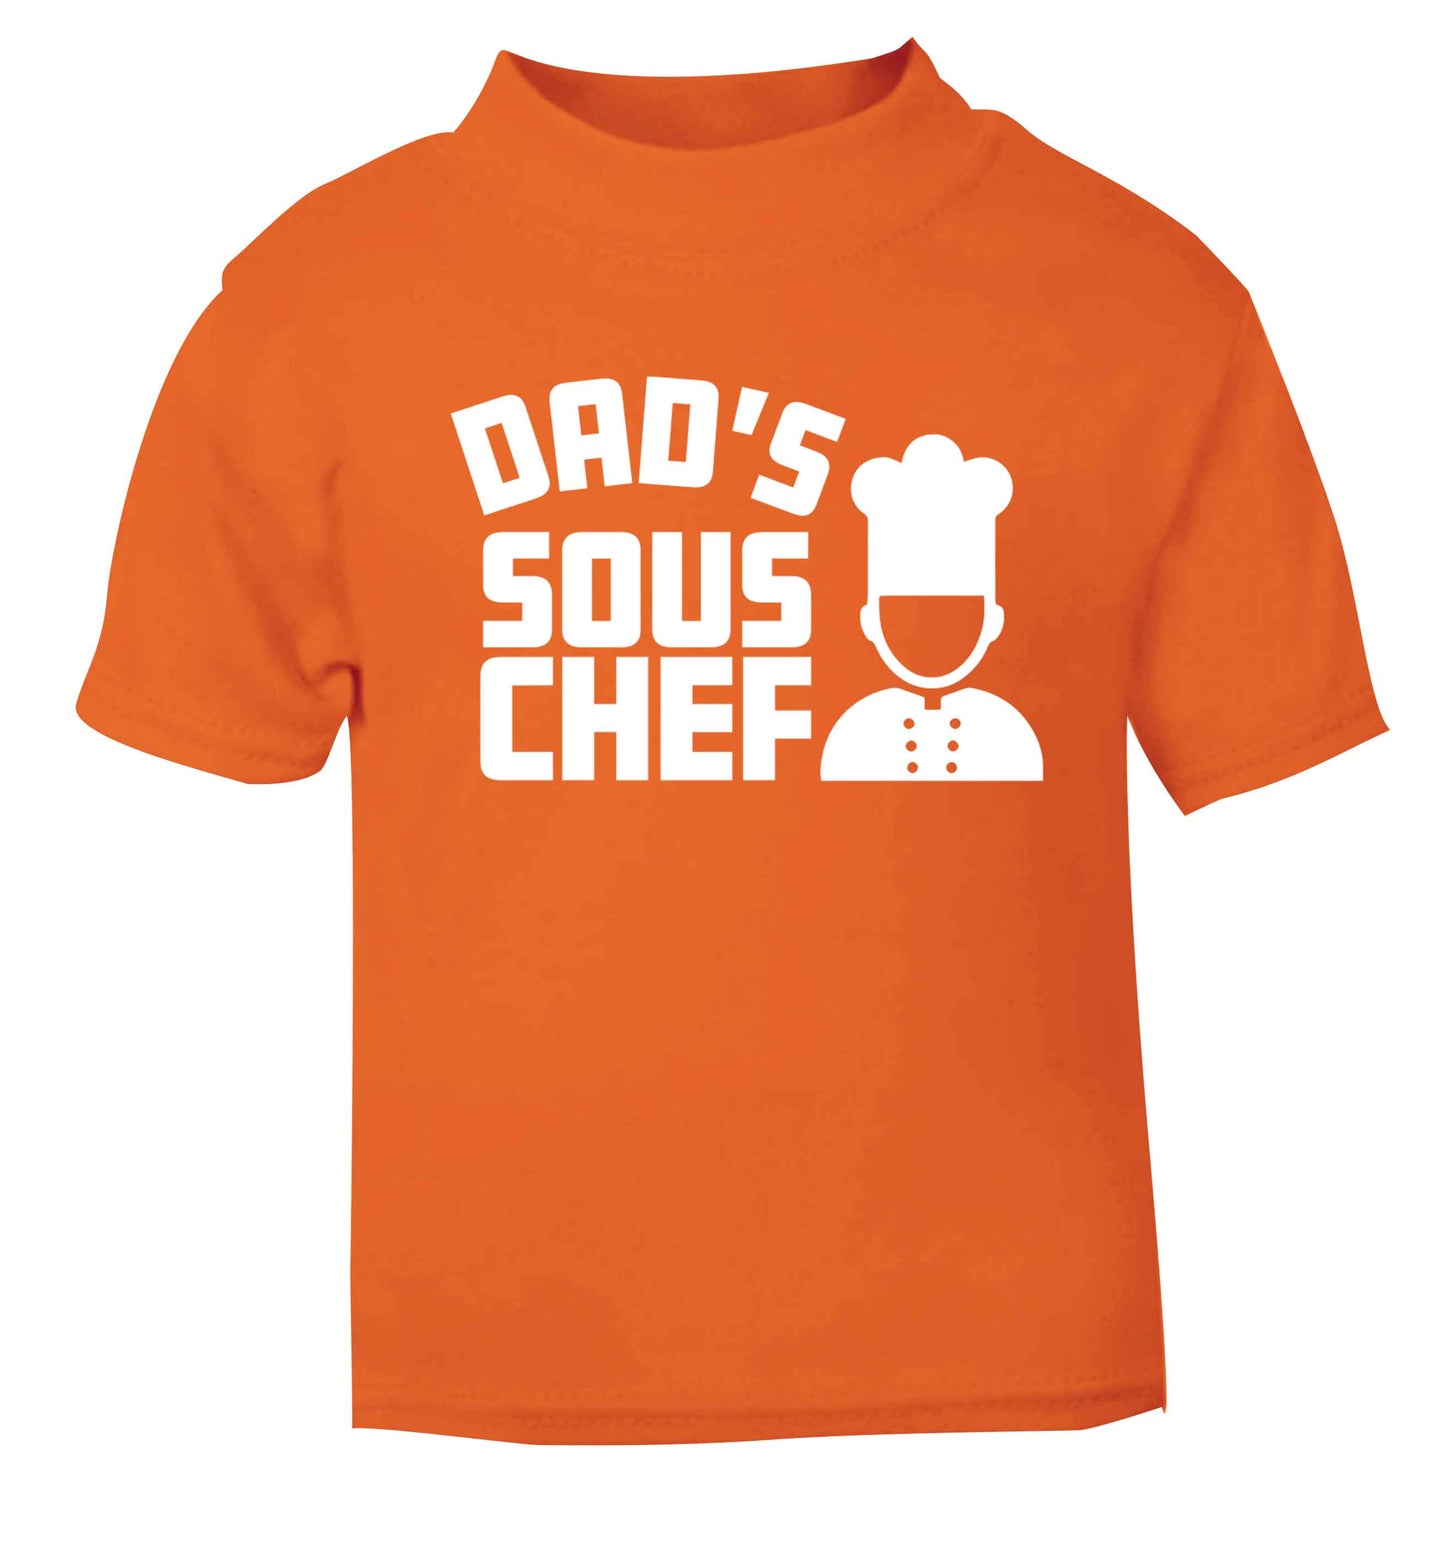 Dad's sous chef orange baby toddler Tshirt 2 Years